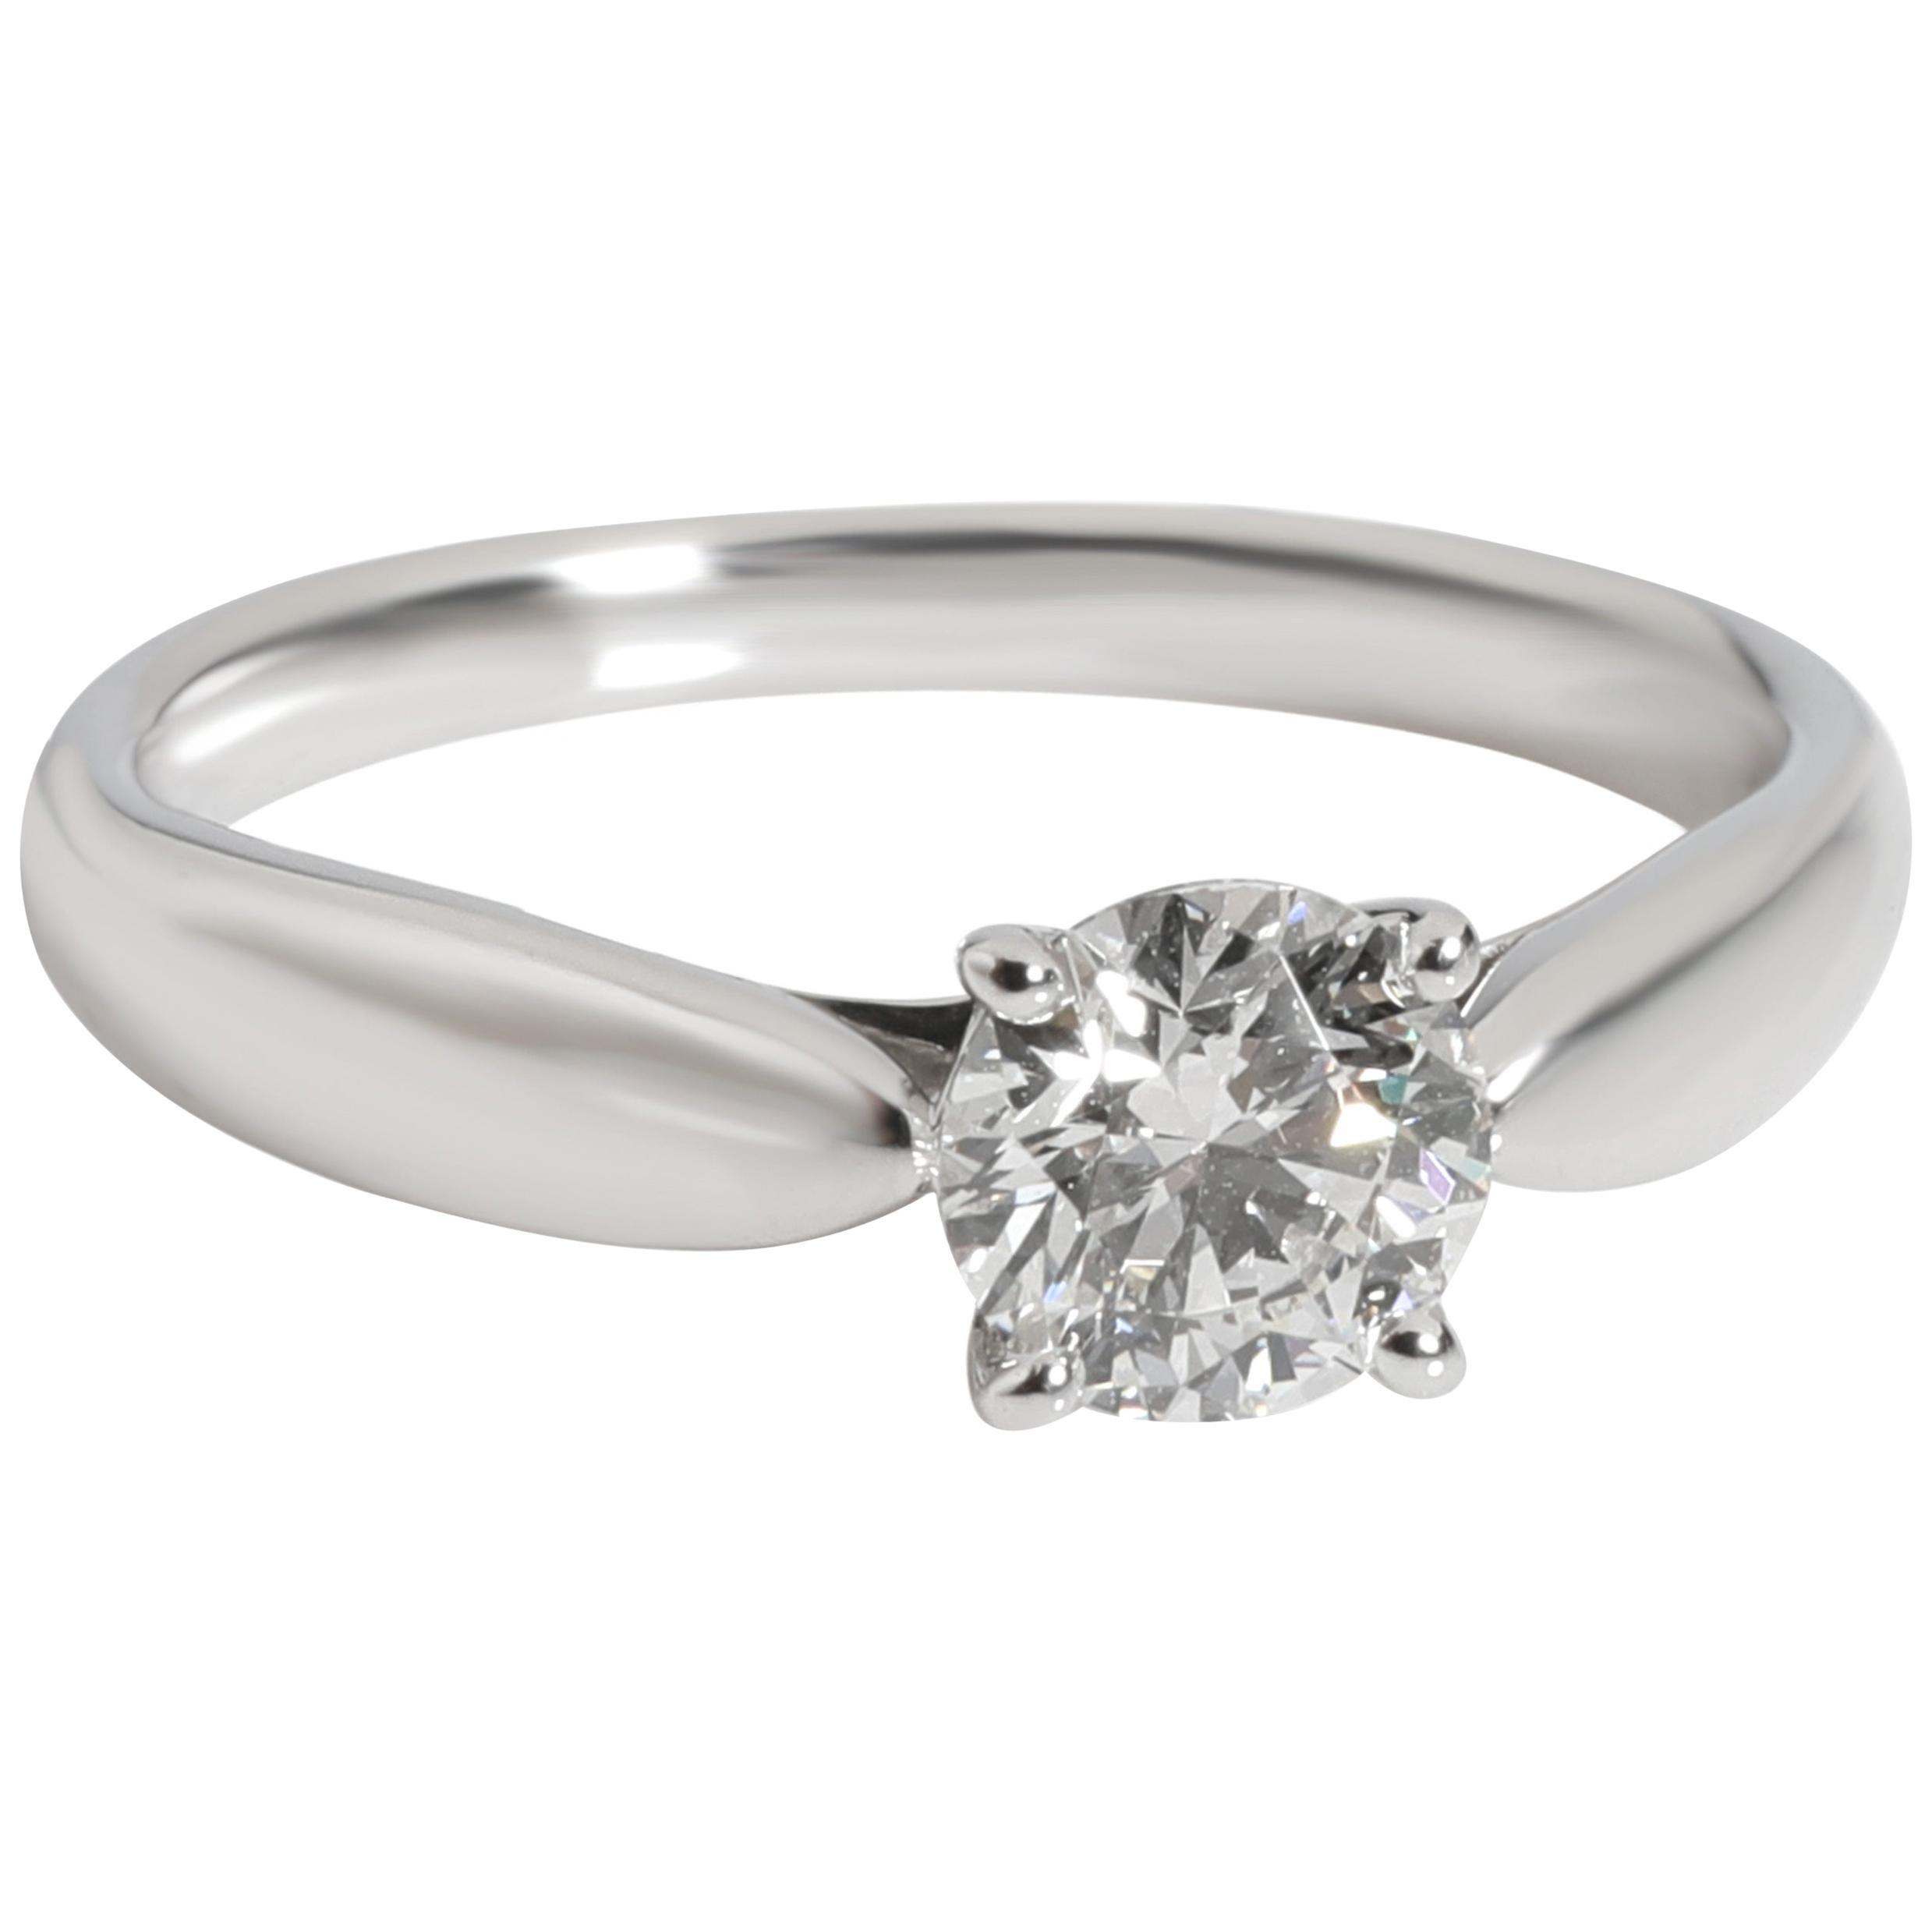 Tiffany & Co. Harmony Diamond Engagement Ring in Platinum F VVS2 0.55 Carat